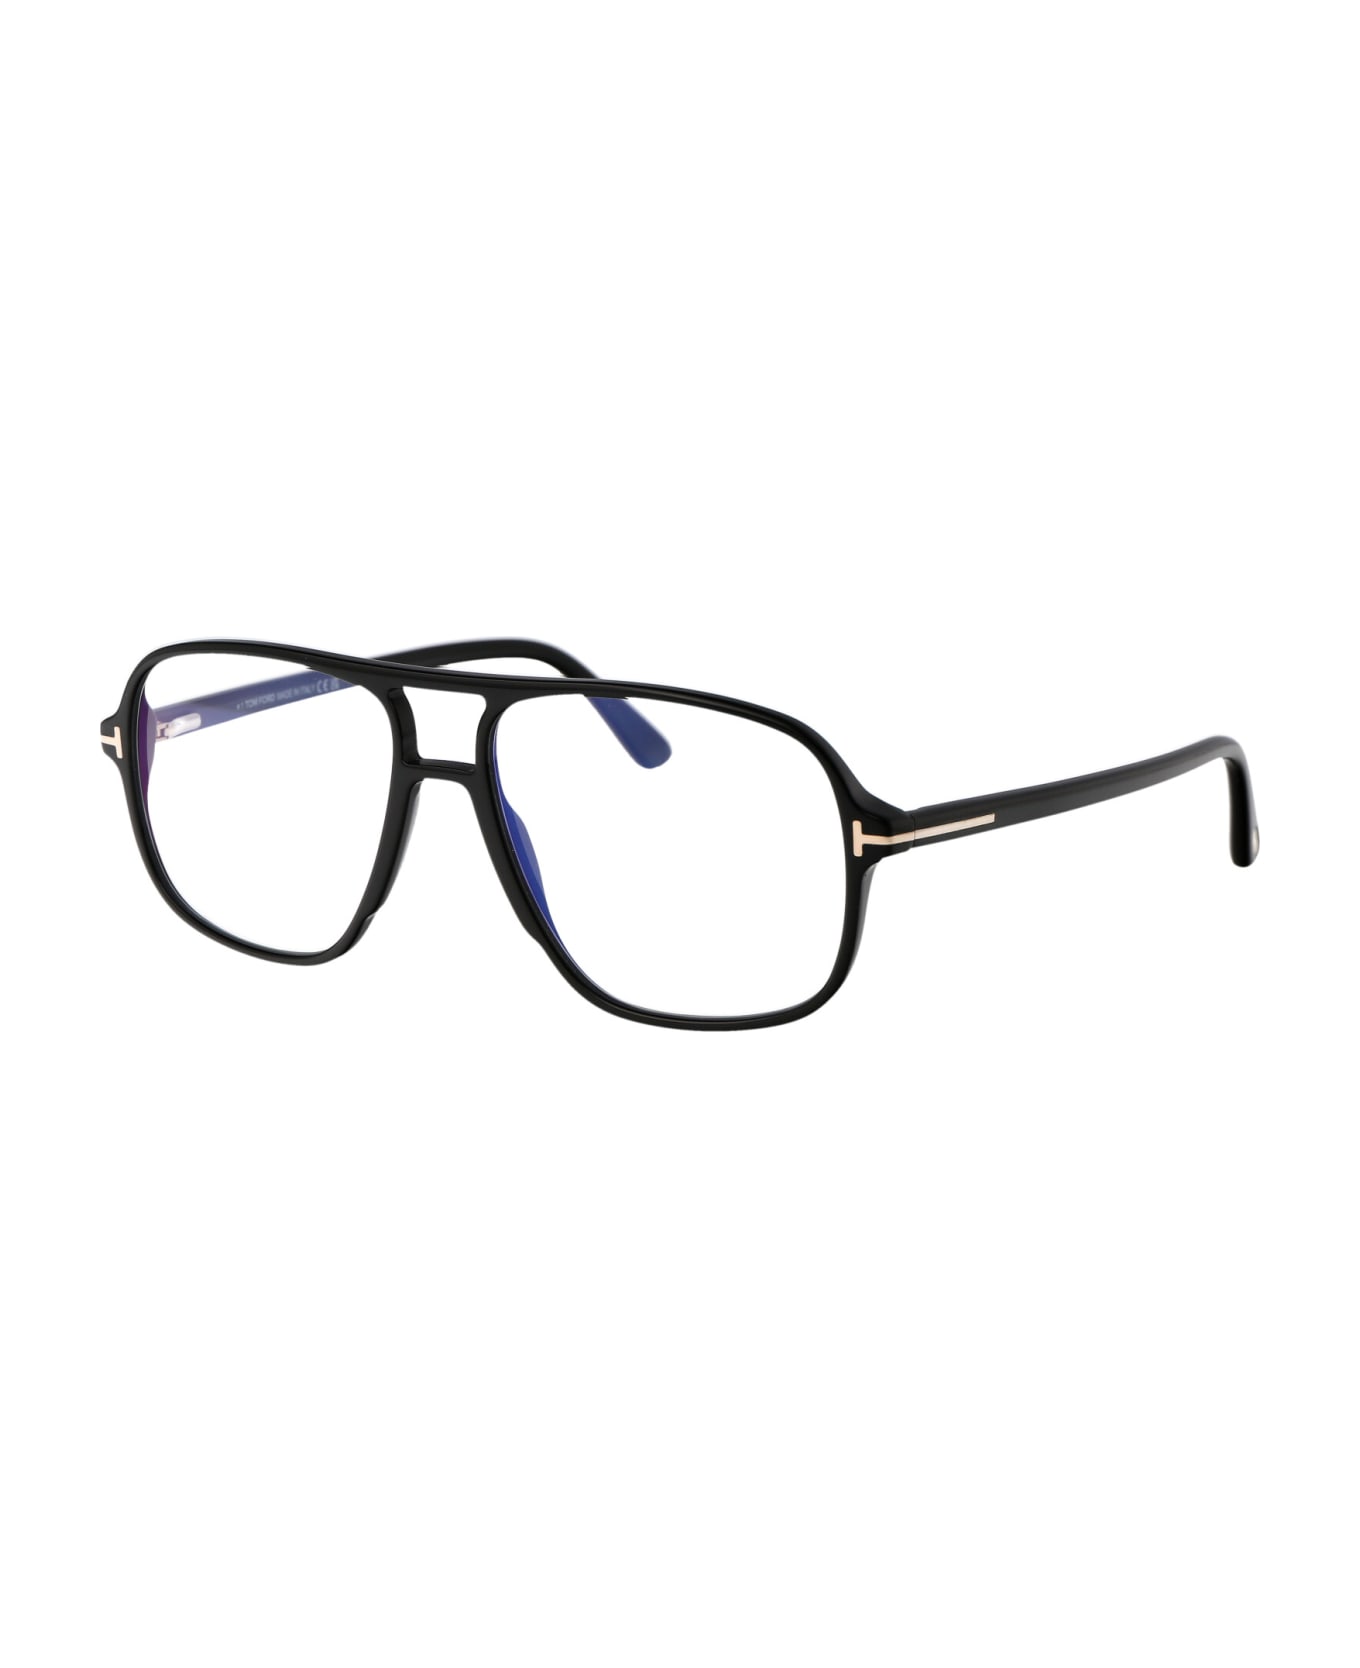 Tom Ford Eyewear Ft5737-b Glasses - 001 Nero Lucido アイウェア